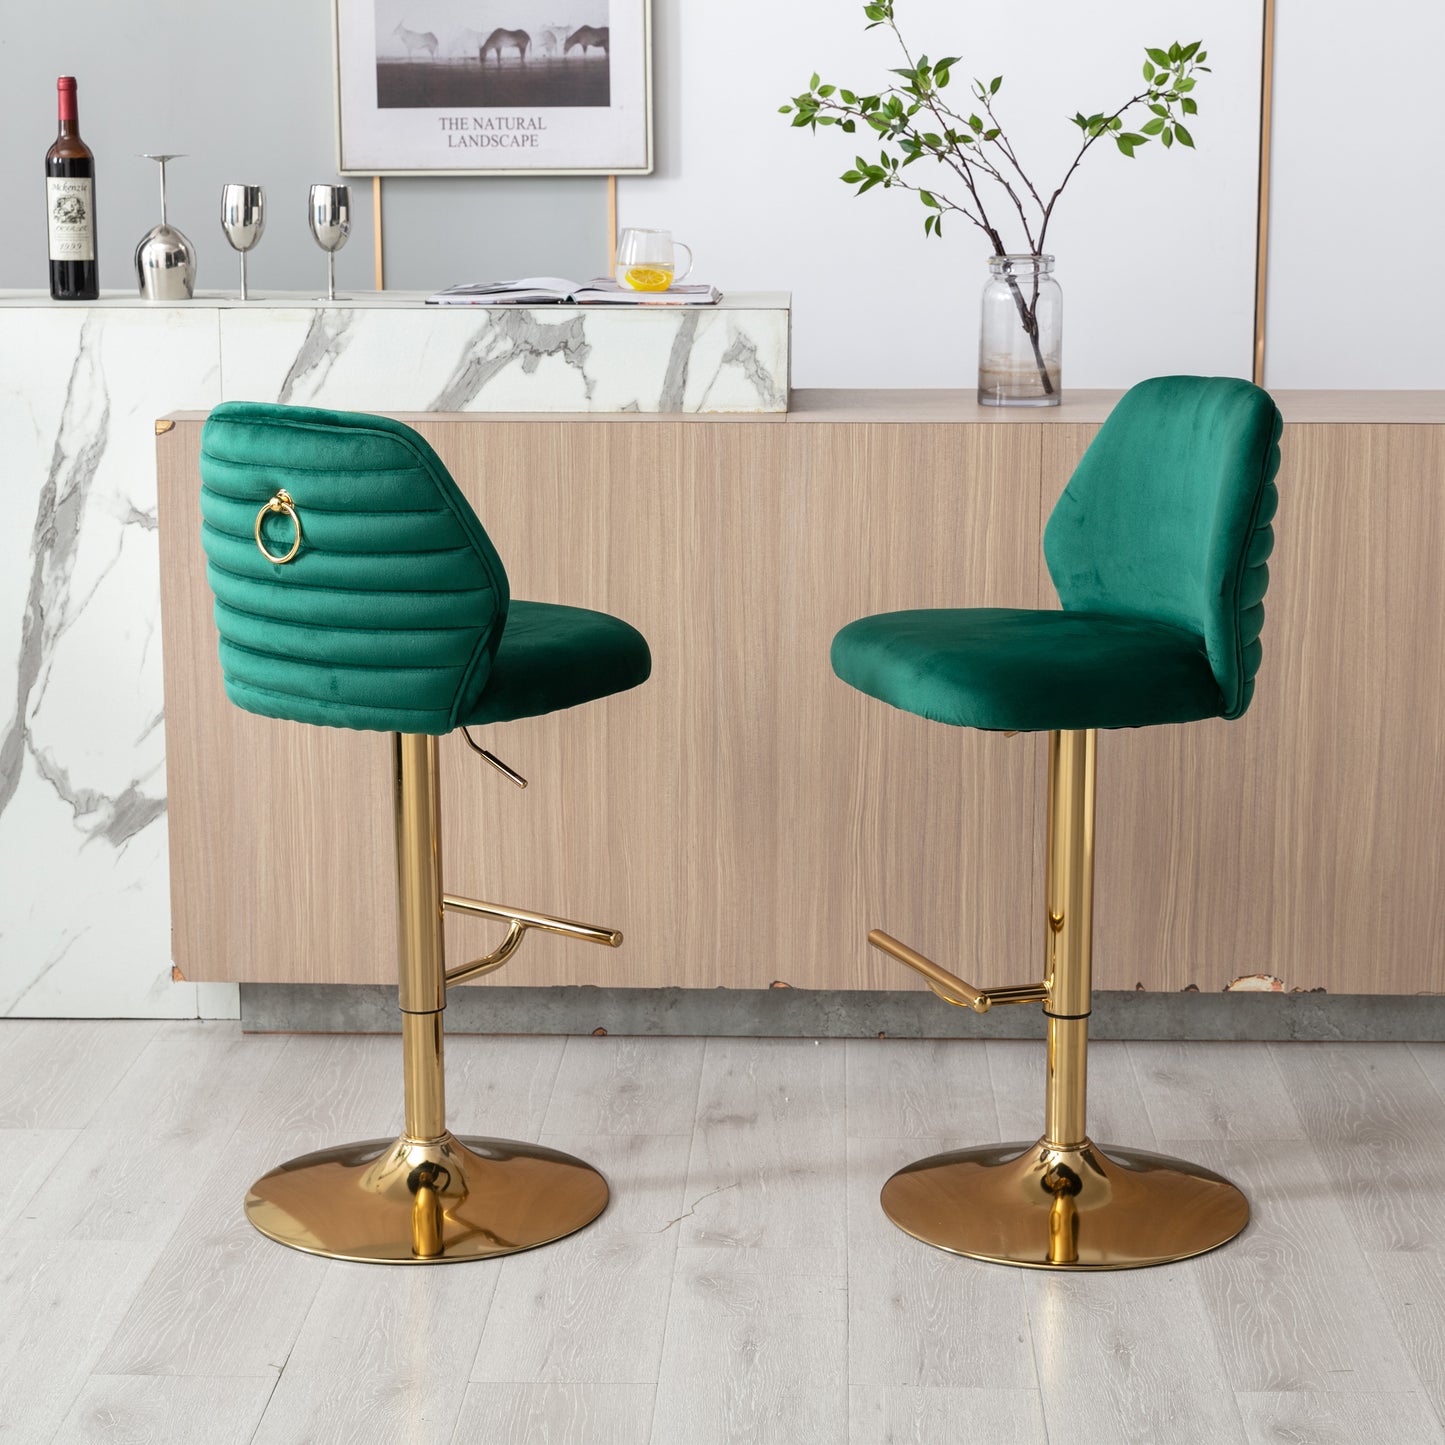 Swivel Bar Stools Chair Set of 2 Modern Adjustable Counter Height Bar Stools, Velvet Upholstered Stool with Tufted High Back & Ring Pull for Kitchen , Chrome Golden Base, Green - Enova Luxe Home Store